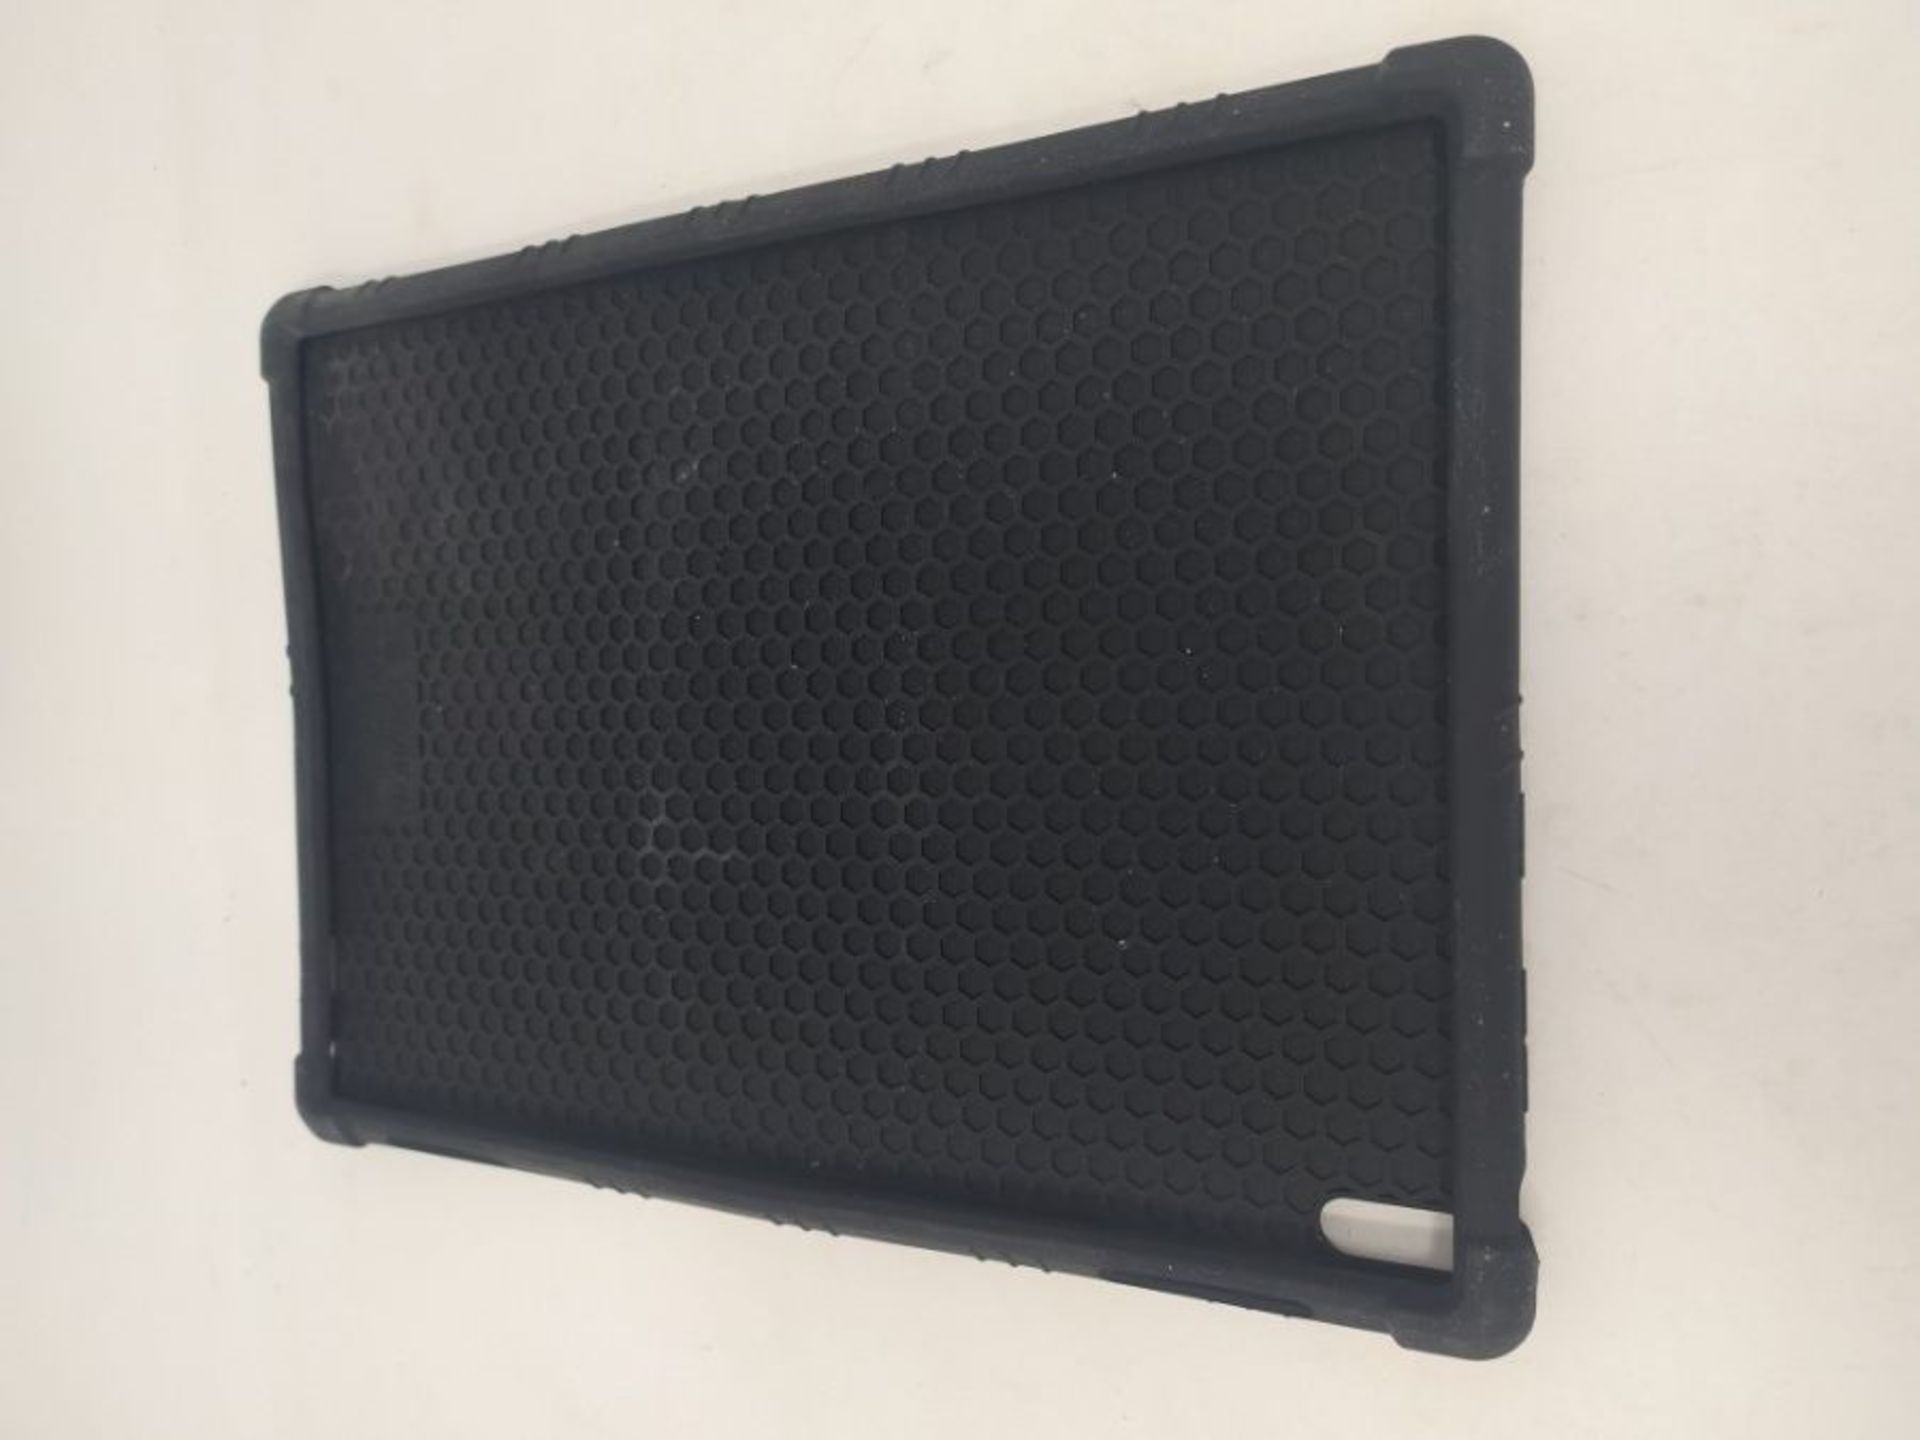 Yudesun Case for Lenovo Tab 4 10 Plus - Stand Silicone Soft Skin Rubber Shell Protecti